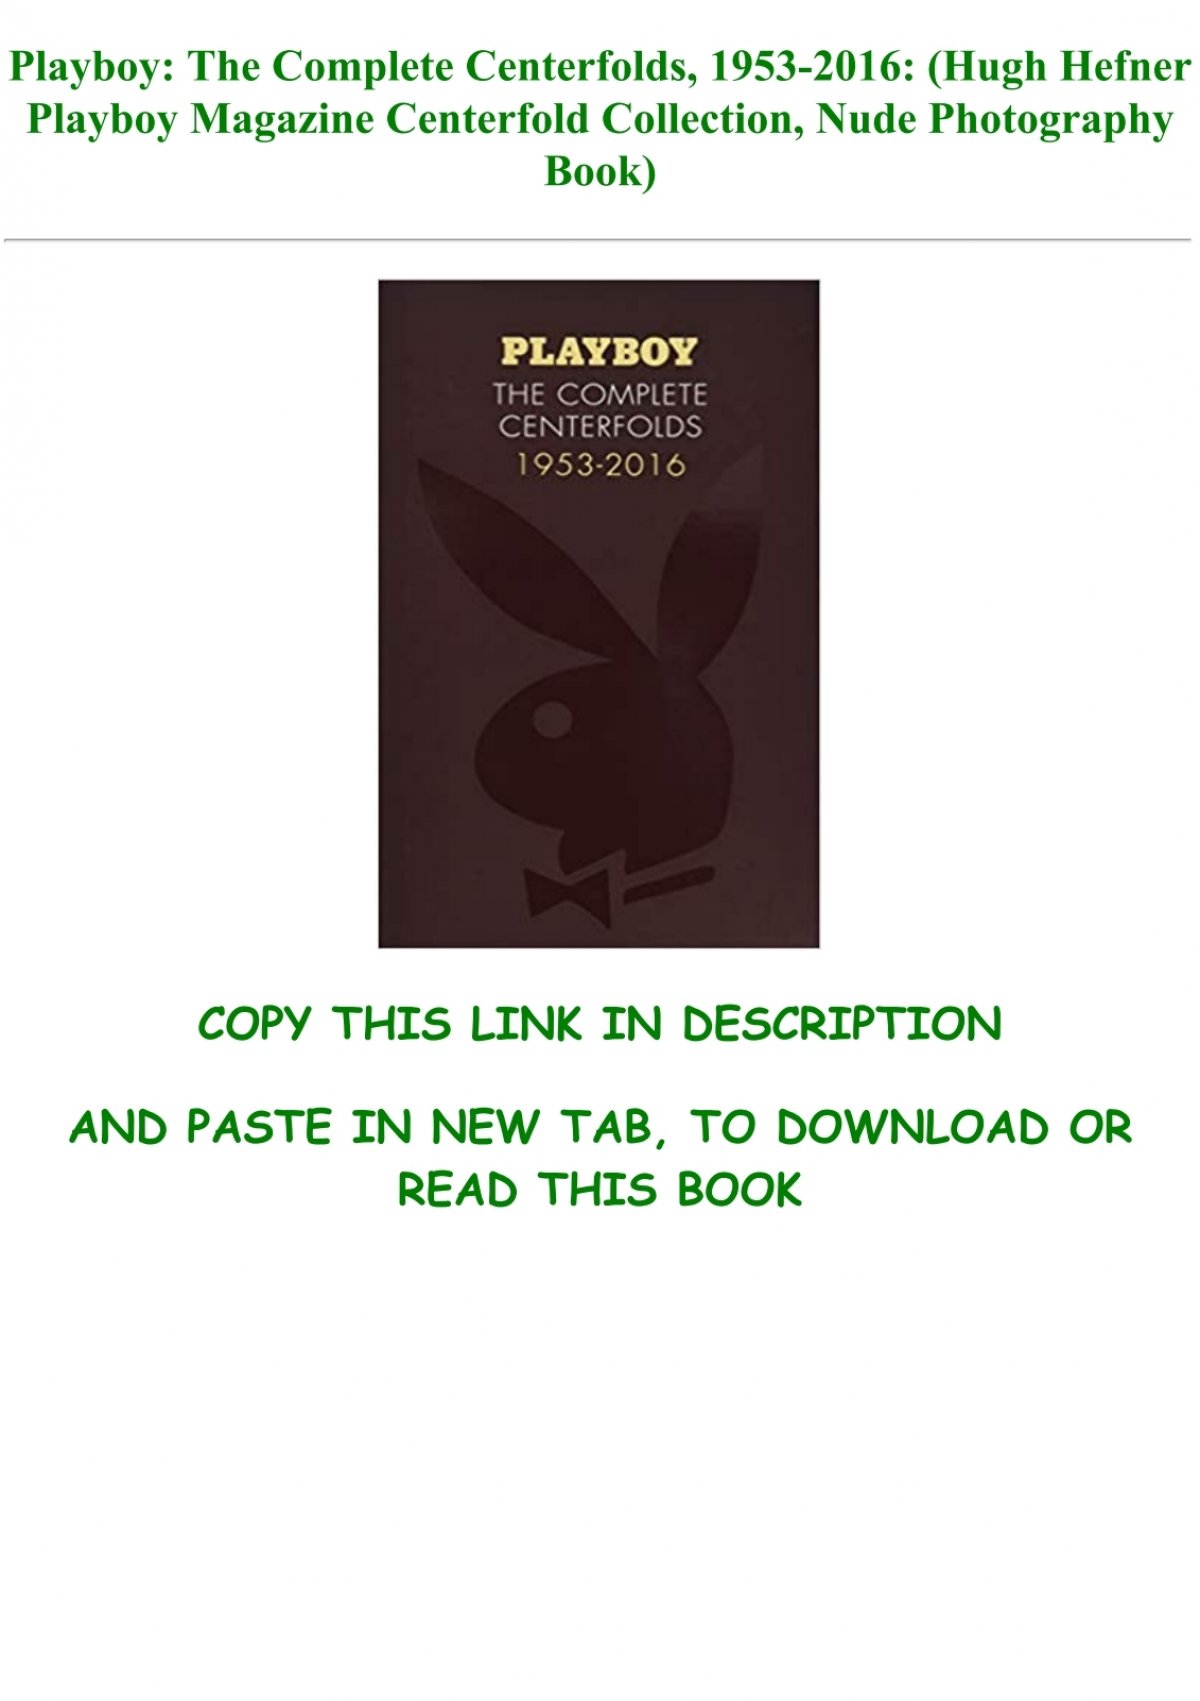 Read Book Pdf Playboy The Complete Centerfolds Hugh